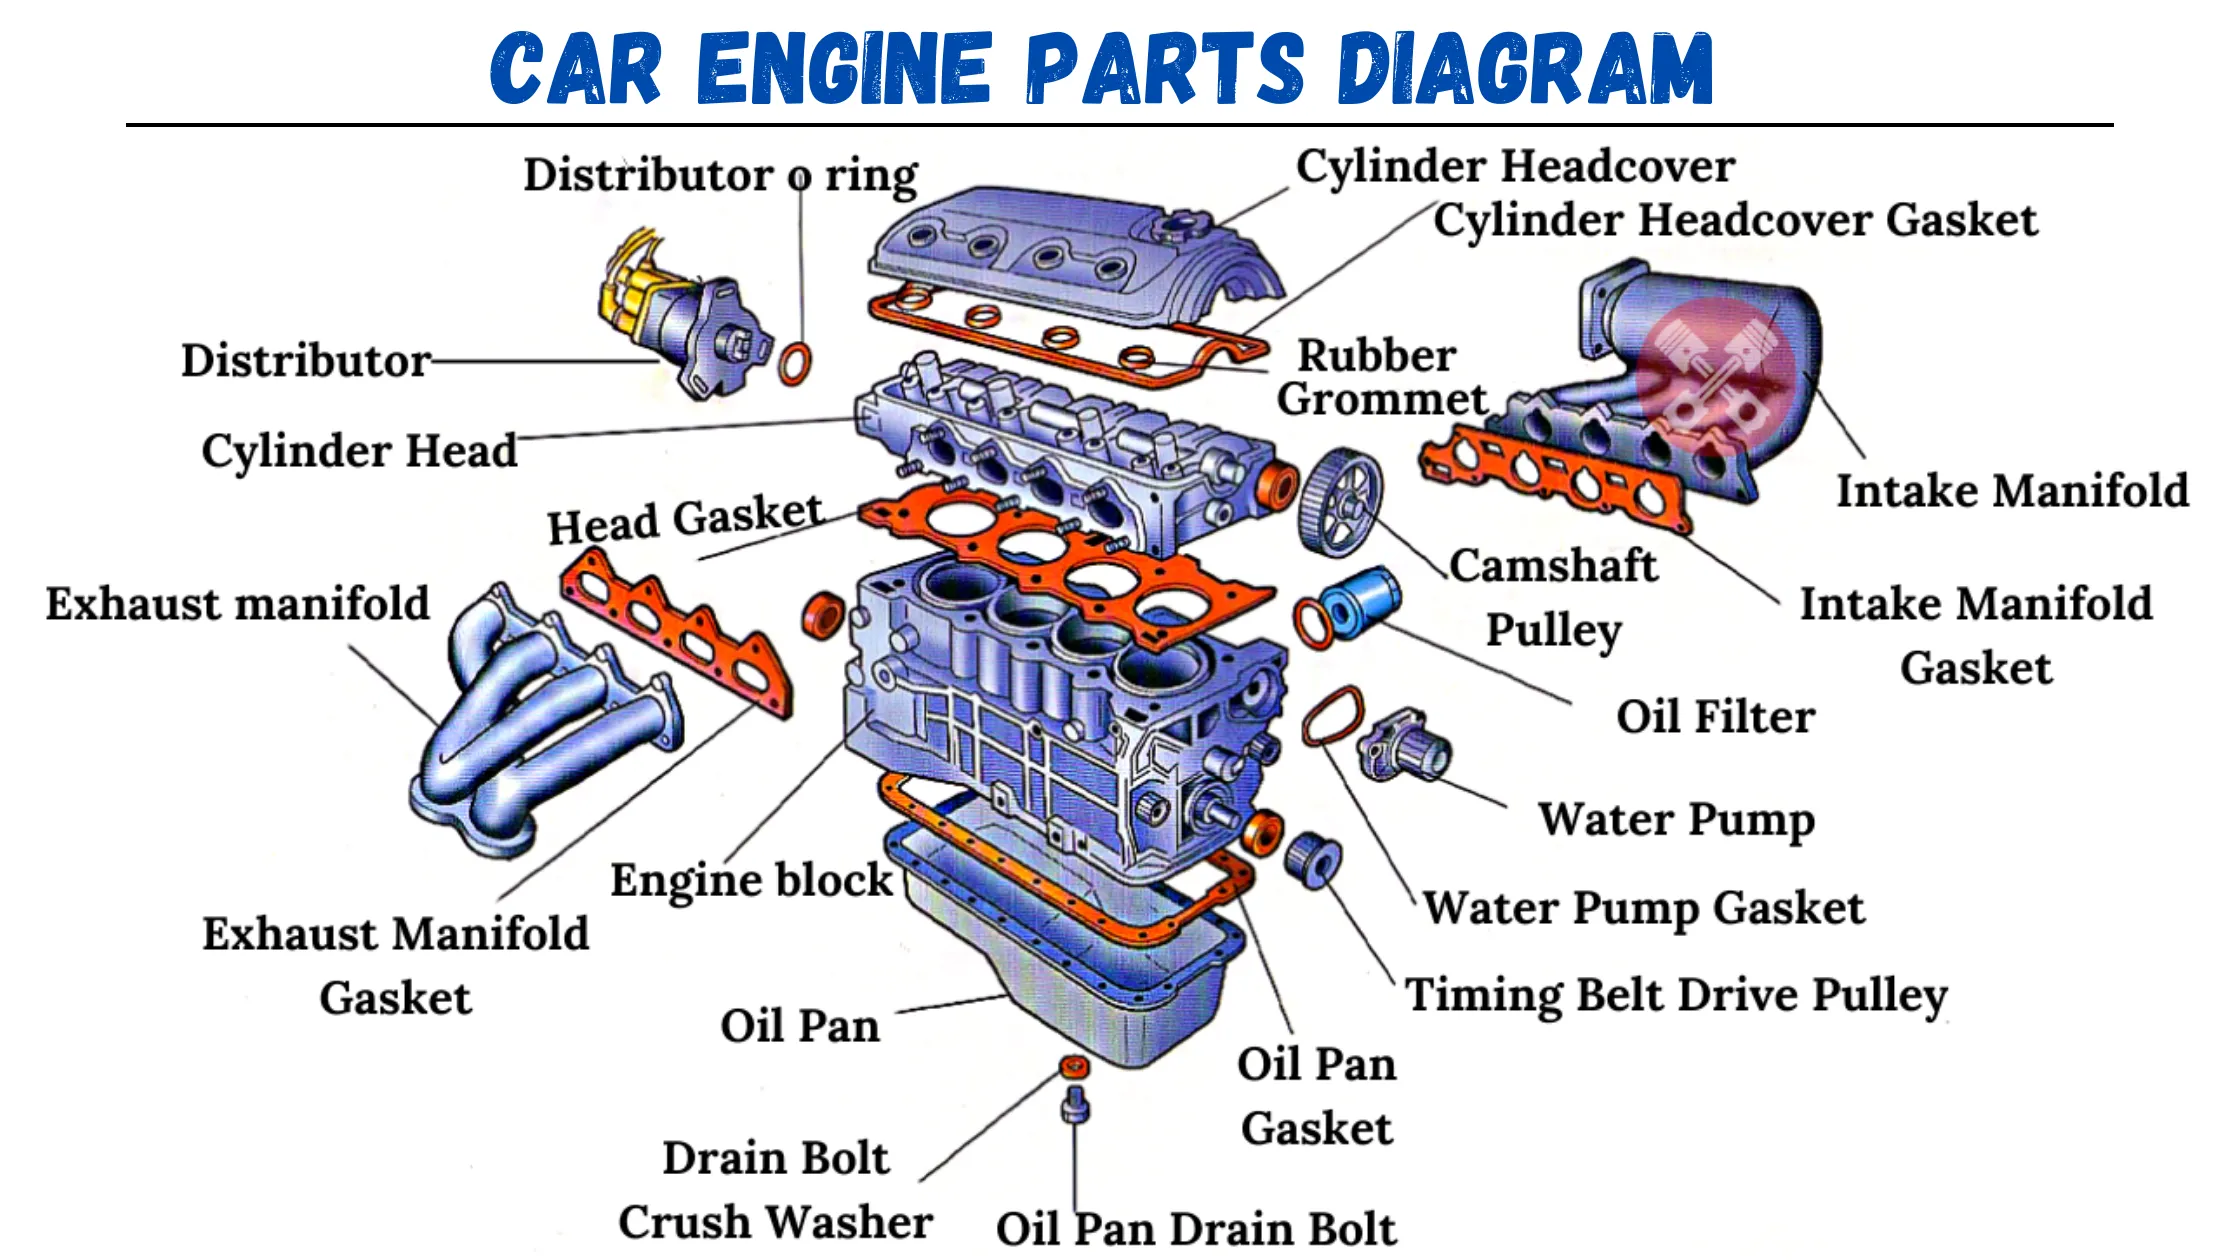 Car-Engine-Parts-Diagram